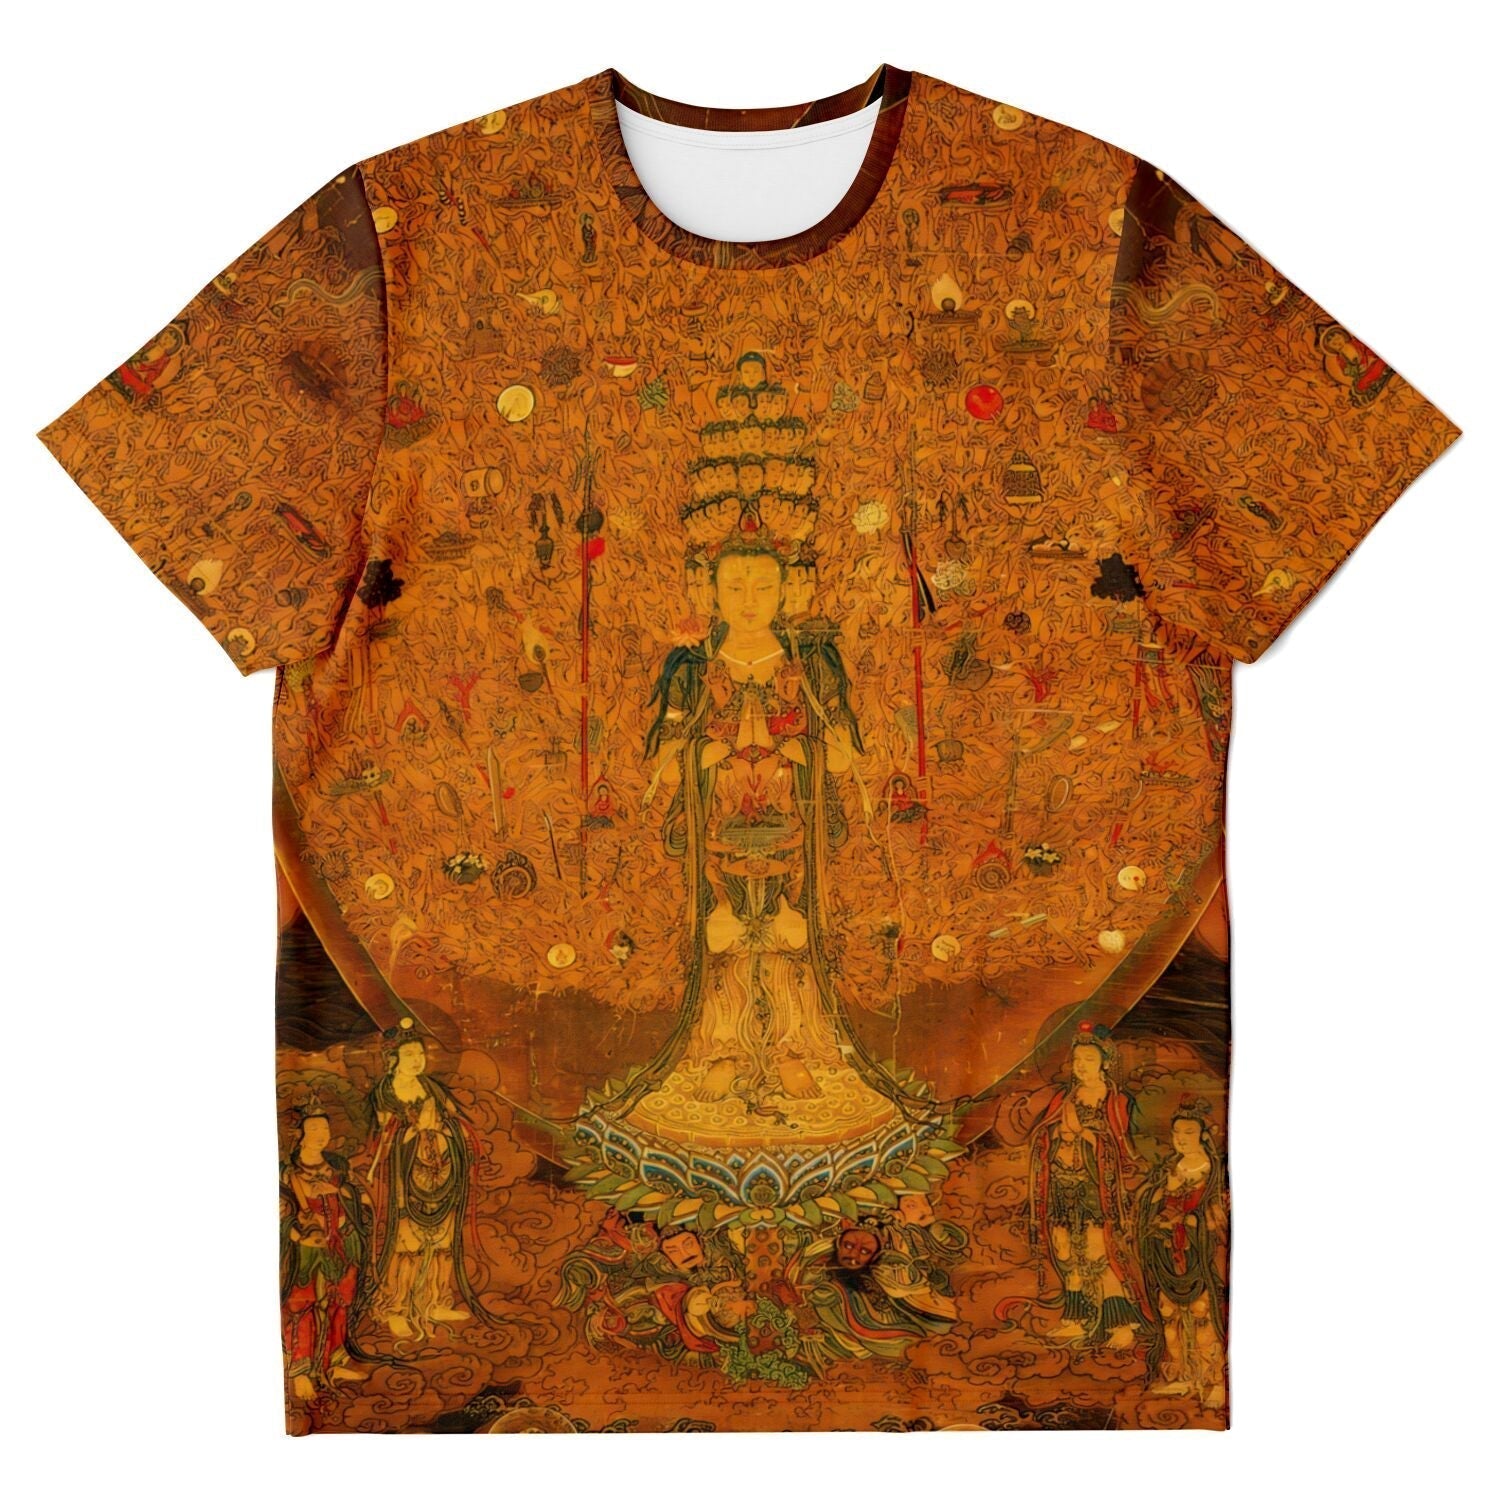 T-shirt XS Guan Yin of a Thousand Arms and Eyes | Avalokiteshvara, Kannon | Buddhist Deity Graphic Art T-Shirt